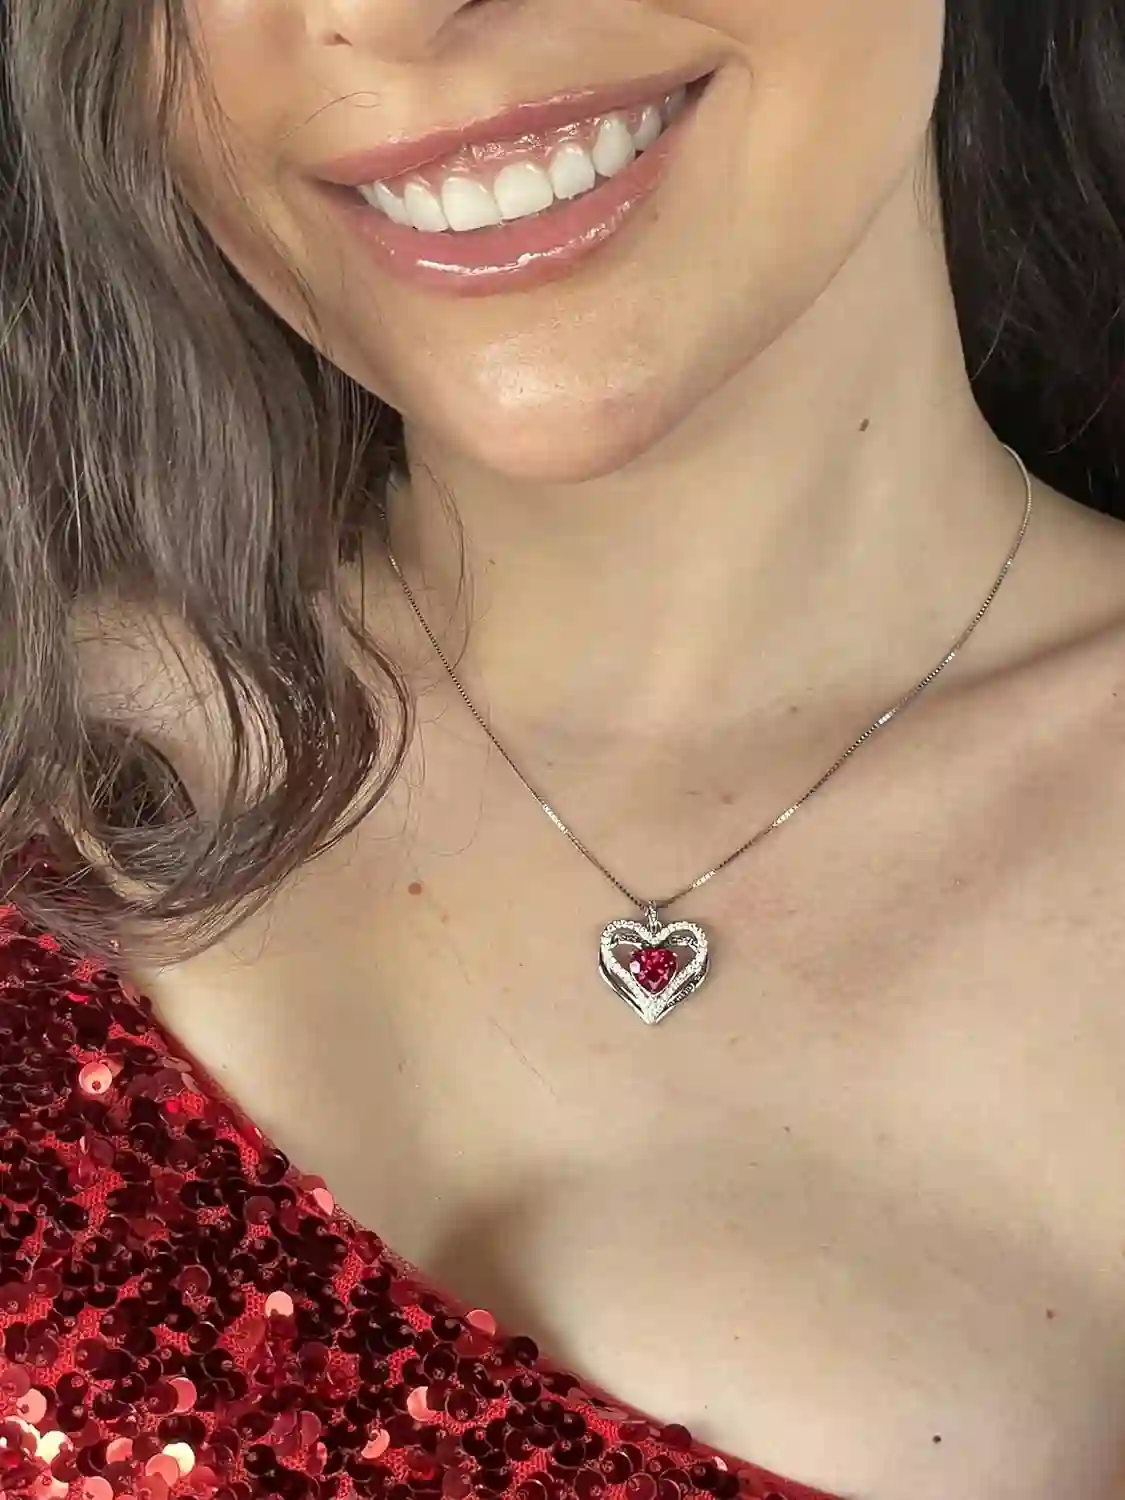 2 carat NATURAL Ruby Diamond Pendant Ruby Necklace Ruby Pendant HEART Shape Diamond Jewelry 18k White Gold 925 Silver Handmade Jewelry 3.2ct 